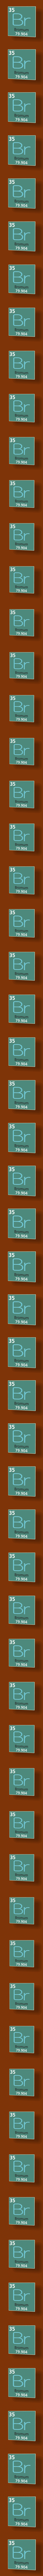 Bromine element #35/118